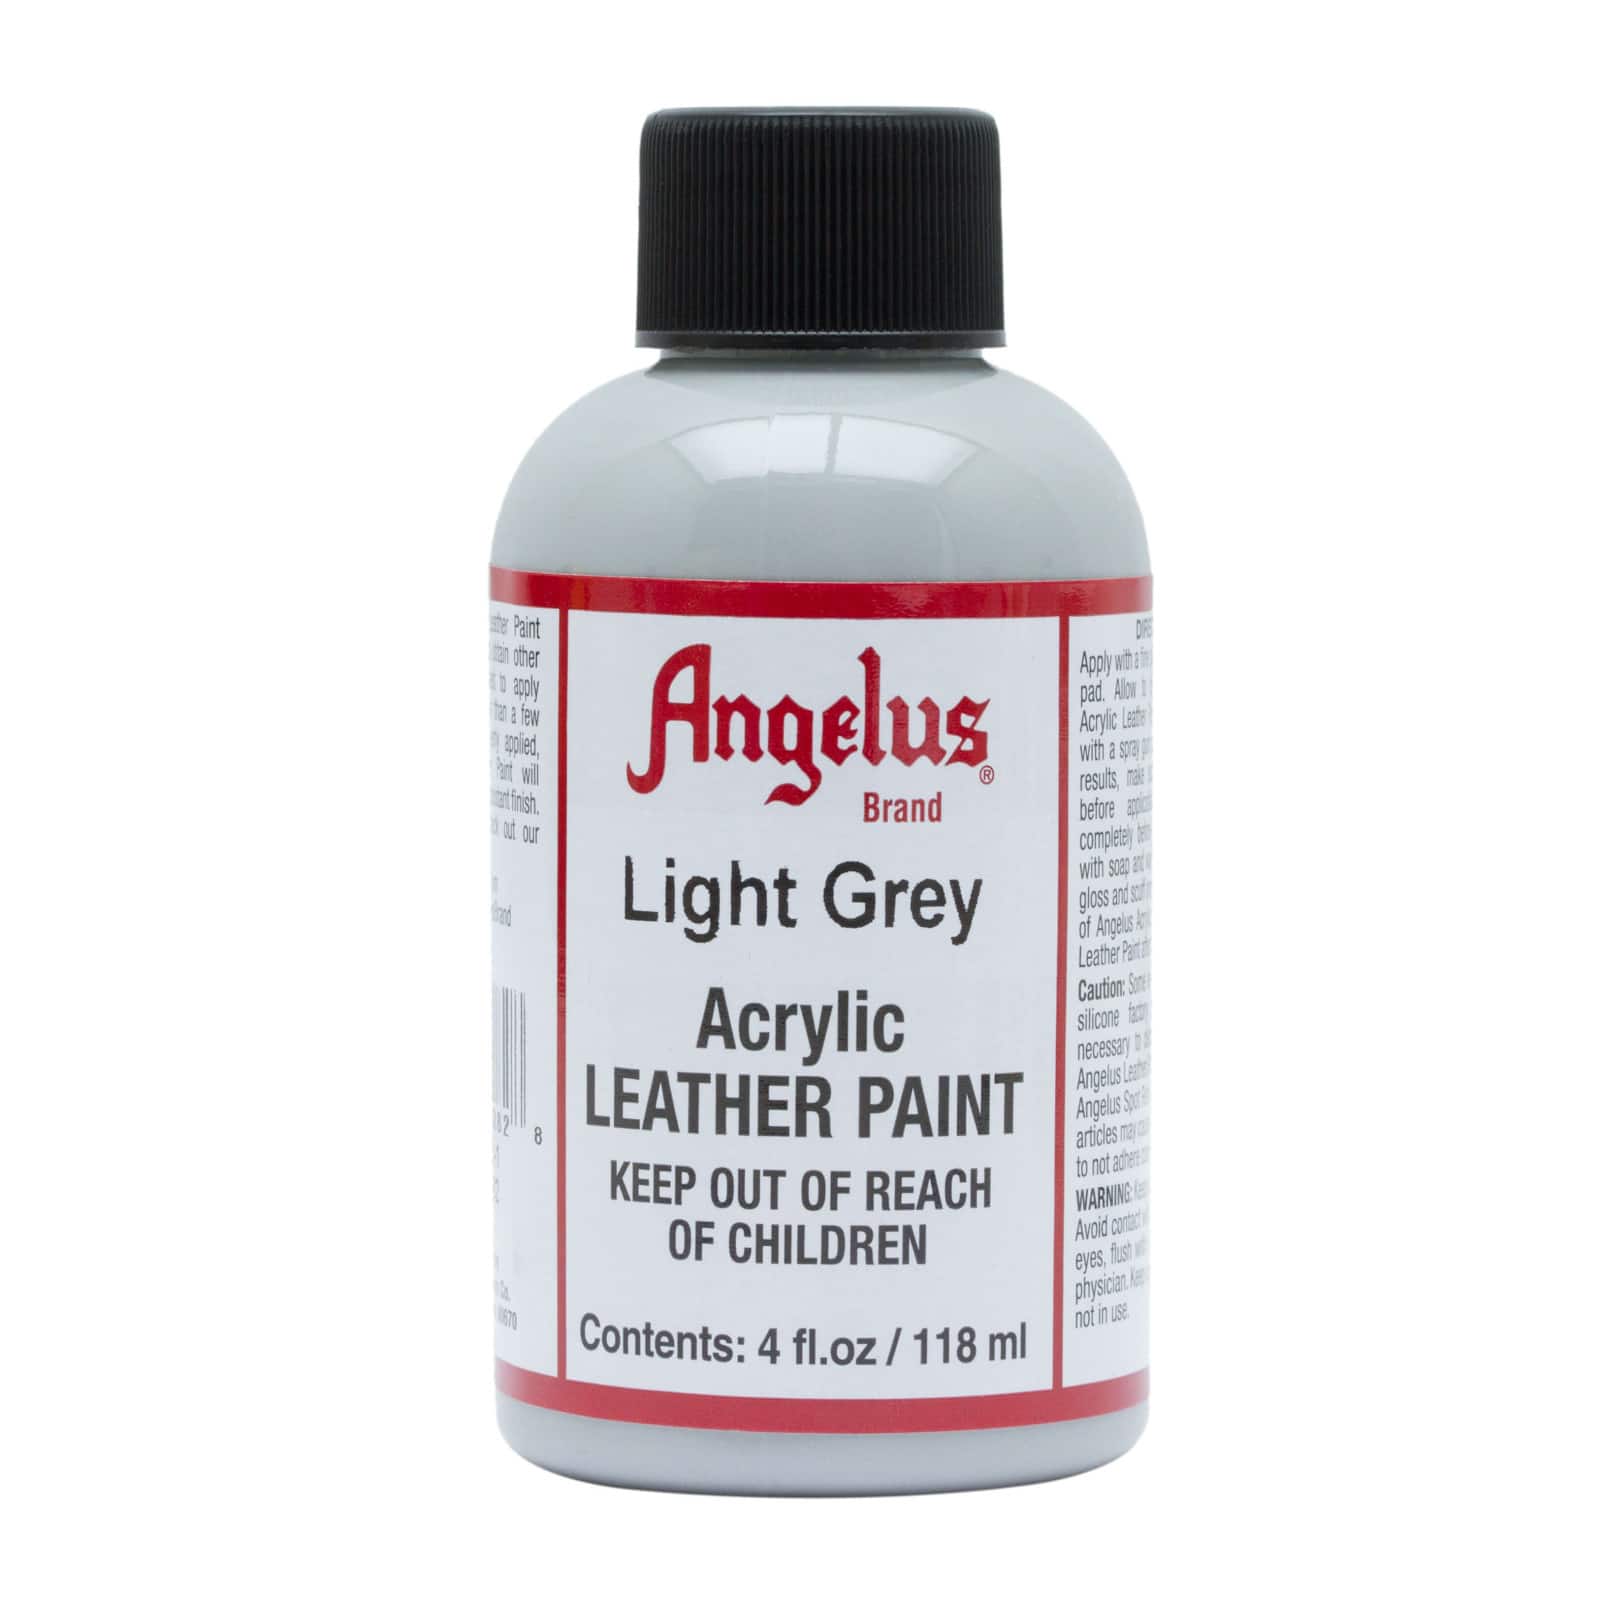  Customer reviews: Angelus Acrylic Leather Paint